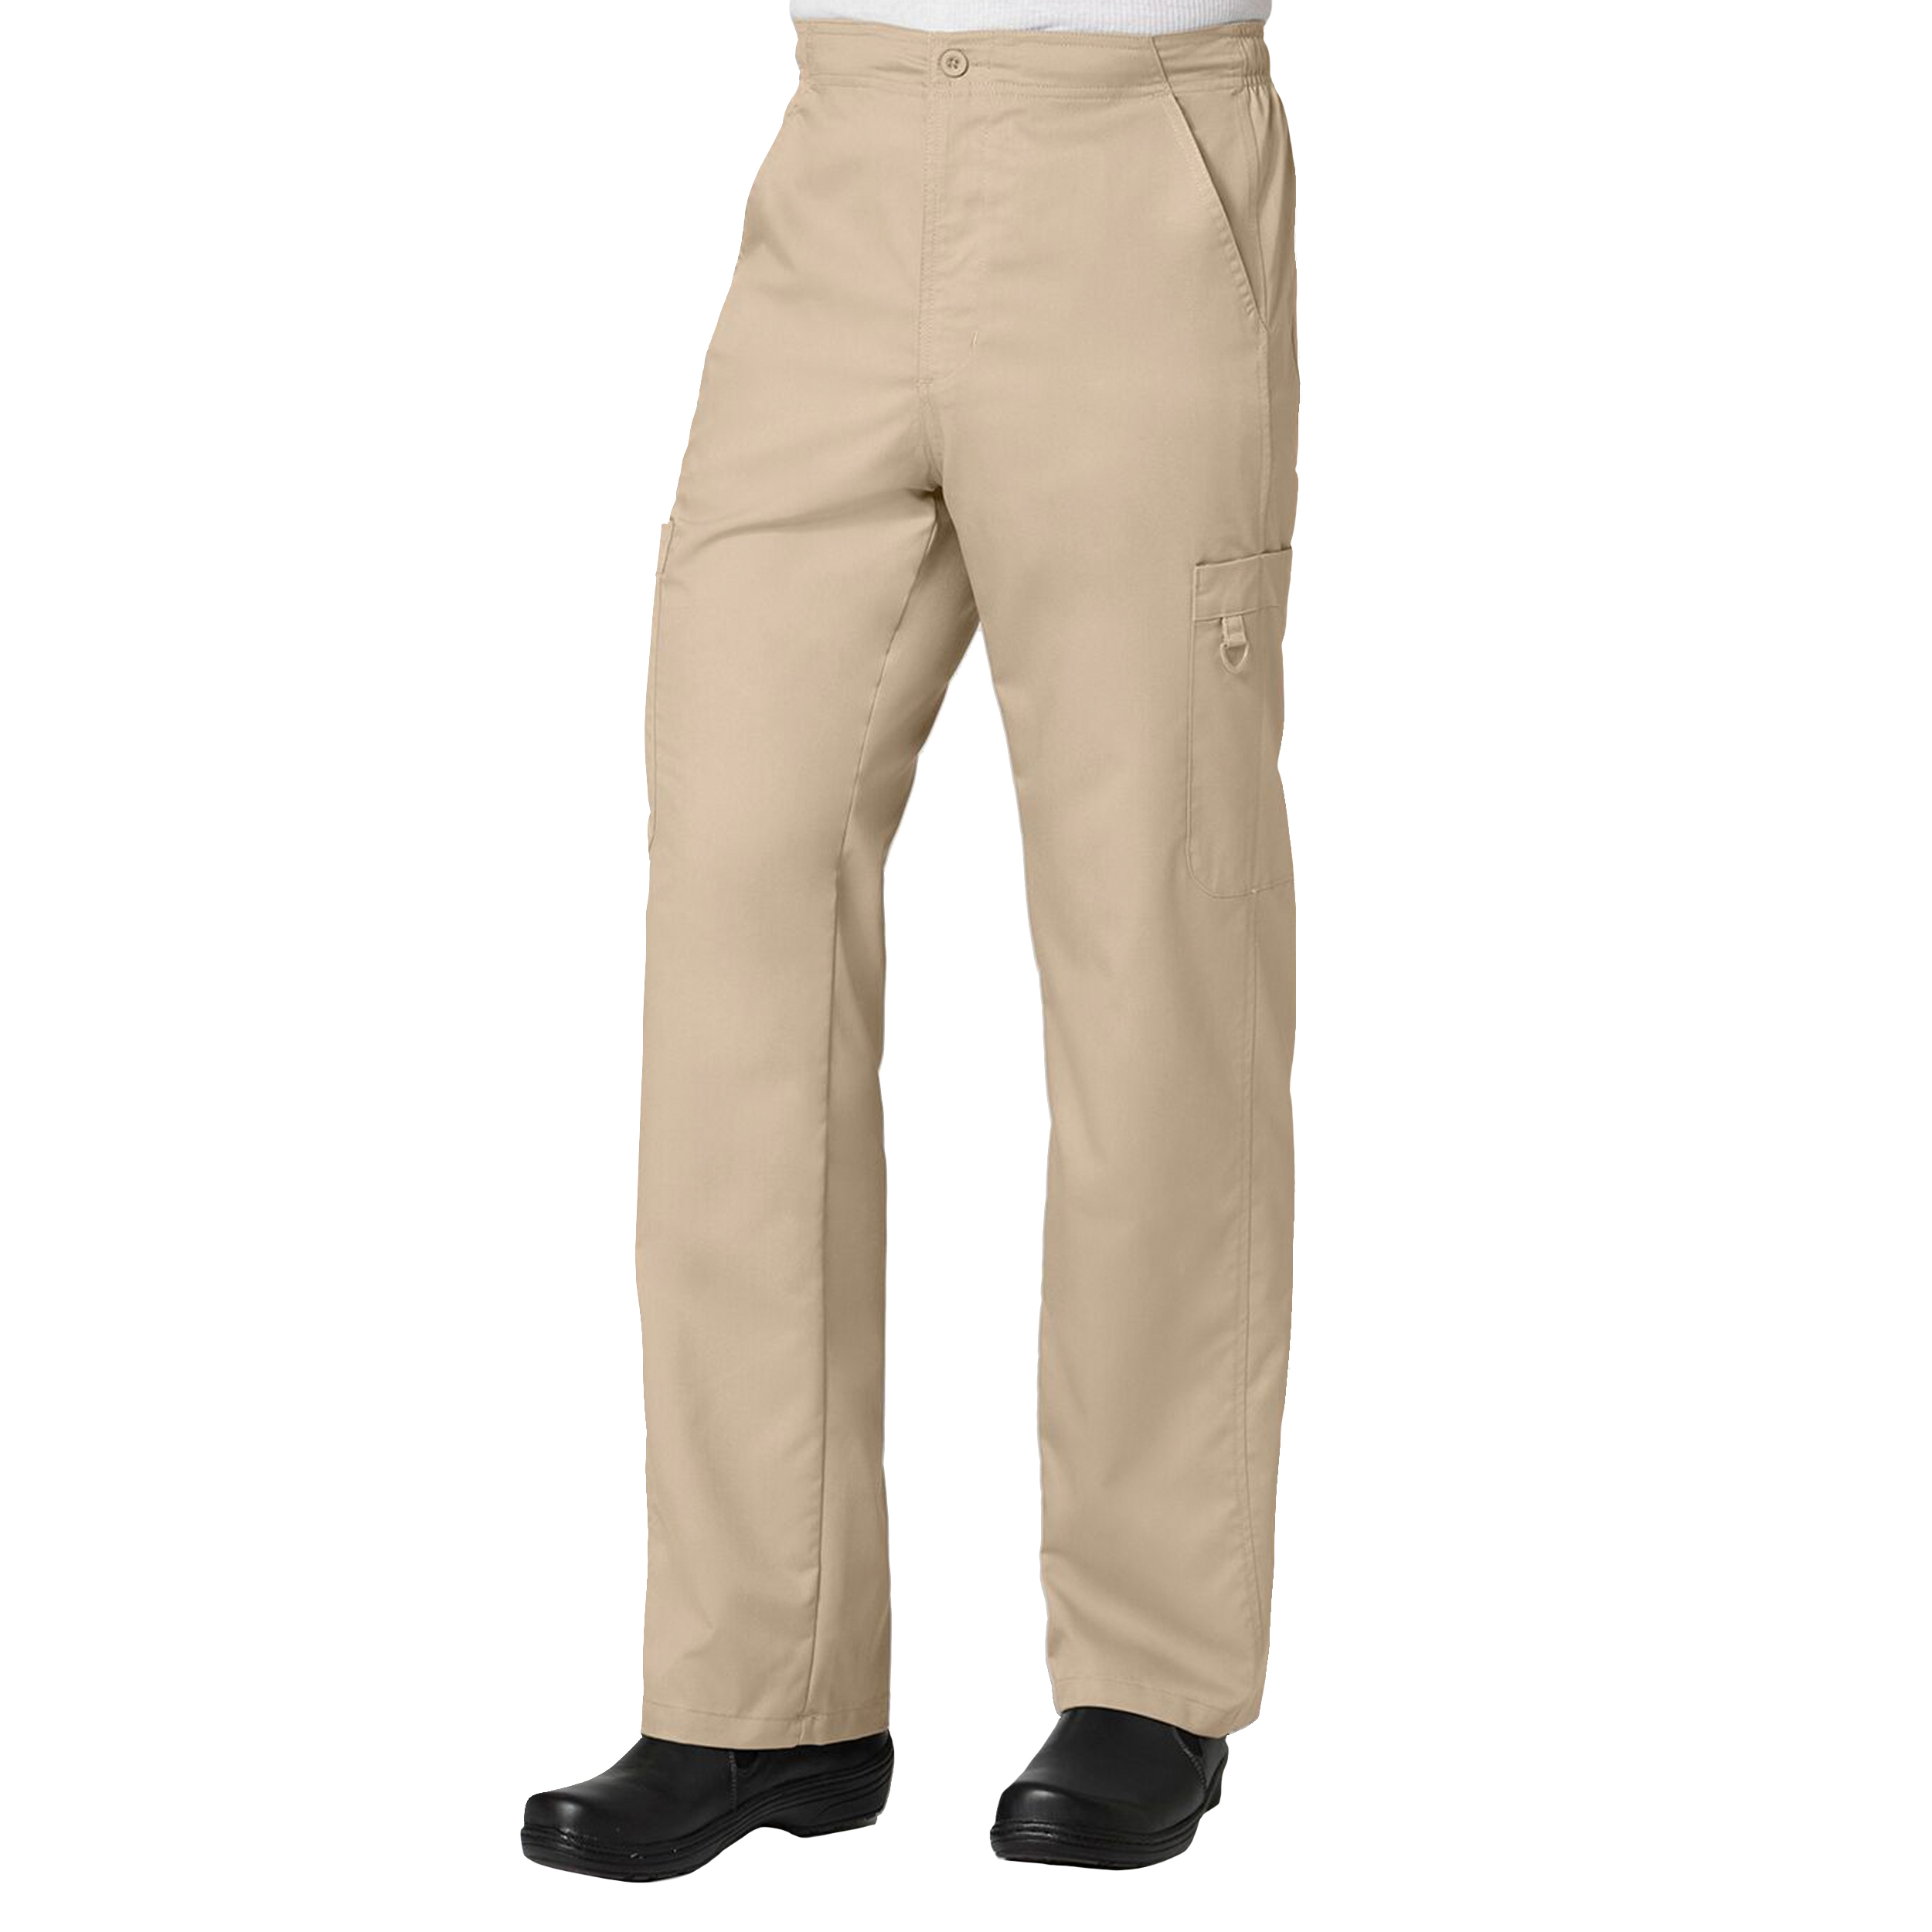 Maevn EON Men's Mesh 3-Pocket V-Neck Top & Men's Half Elastic Cargo Pant Scrub Set - image 3 of 5